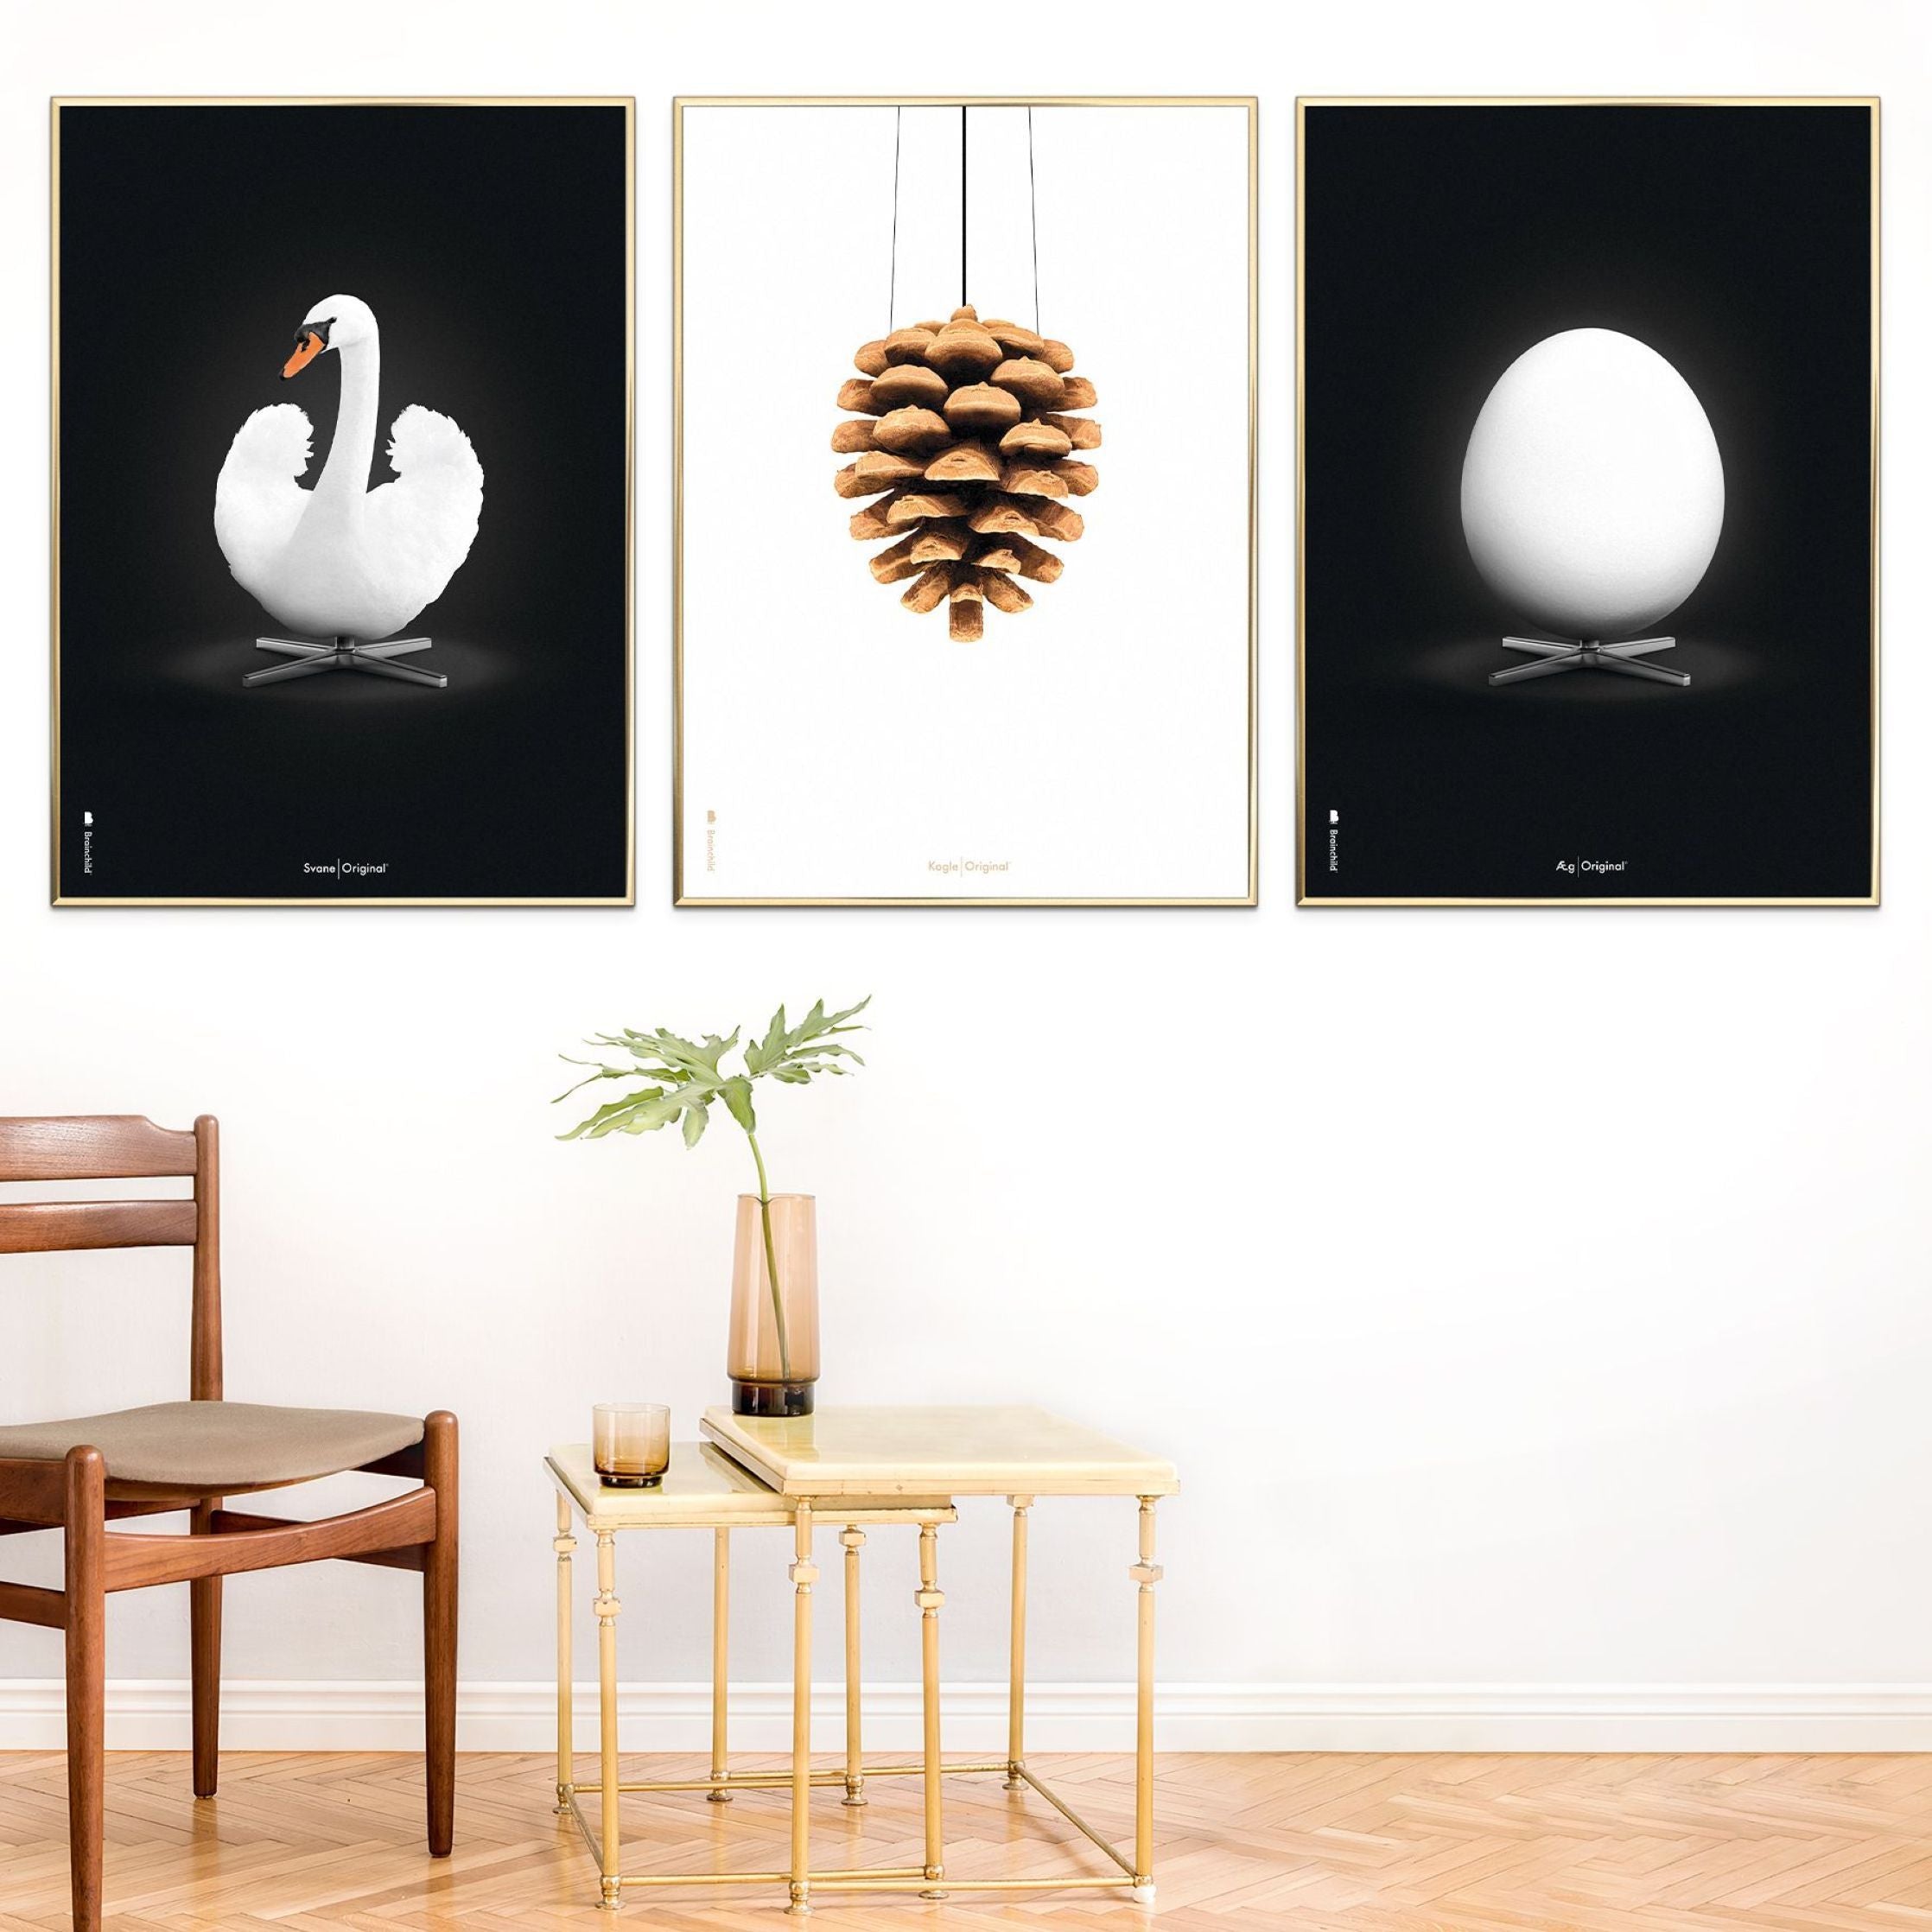 Brainchild Egg Classic Poster, Frame In Black Lacquered Wood 30x40 Cm, Black Background